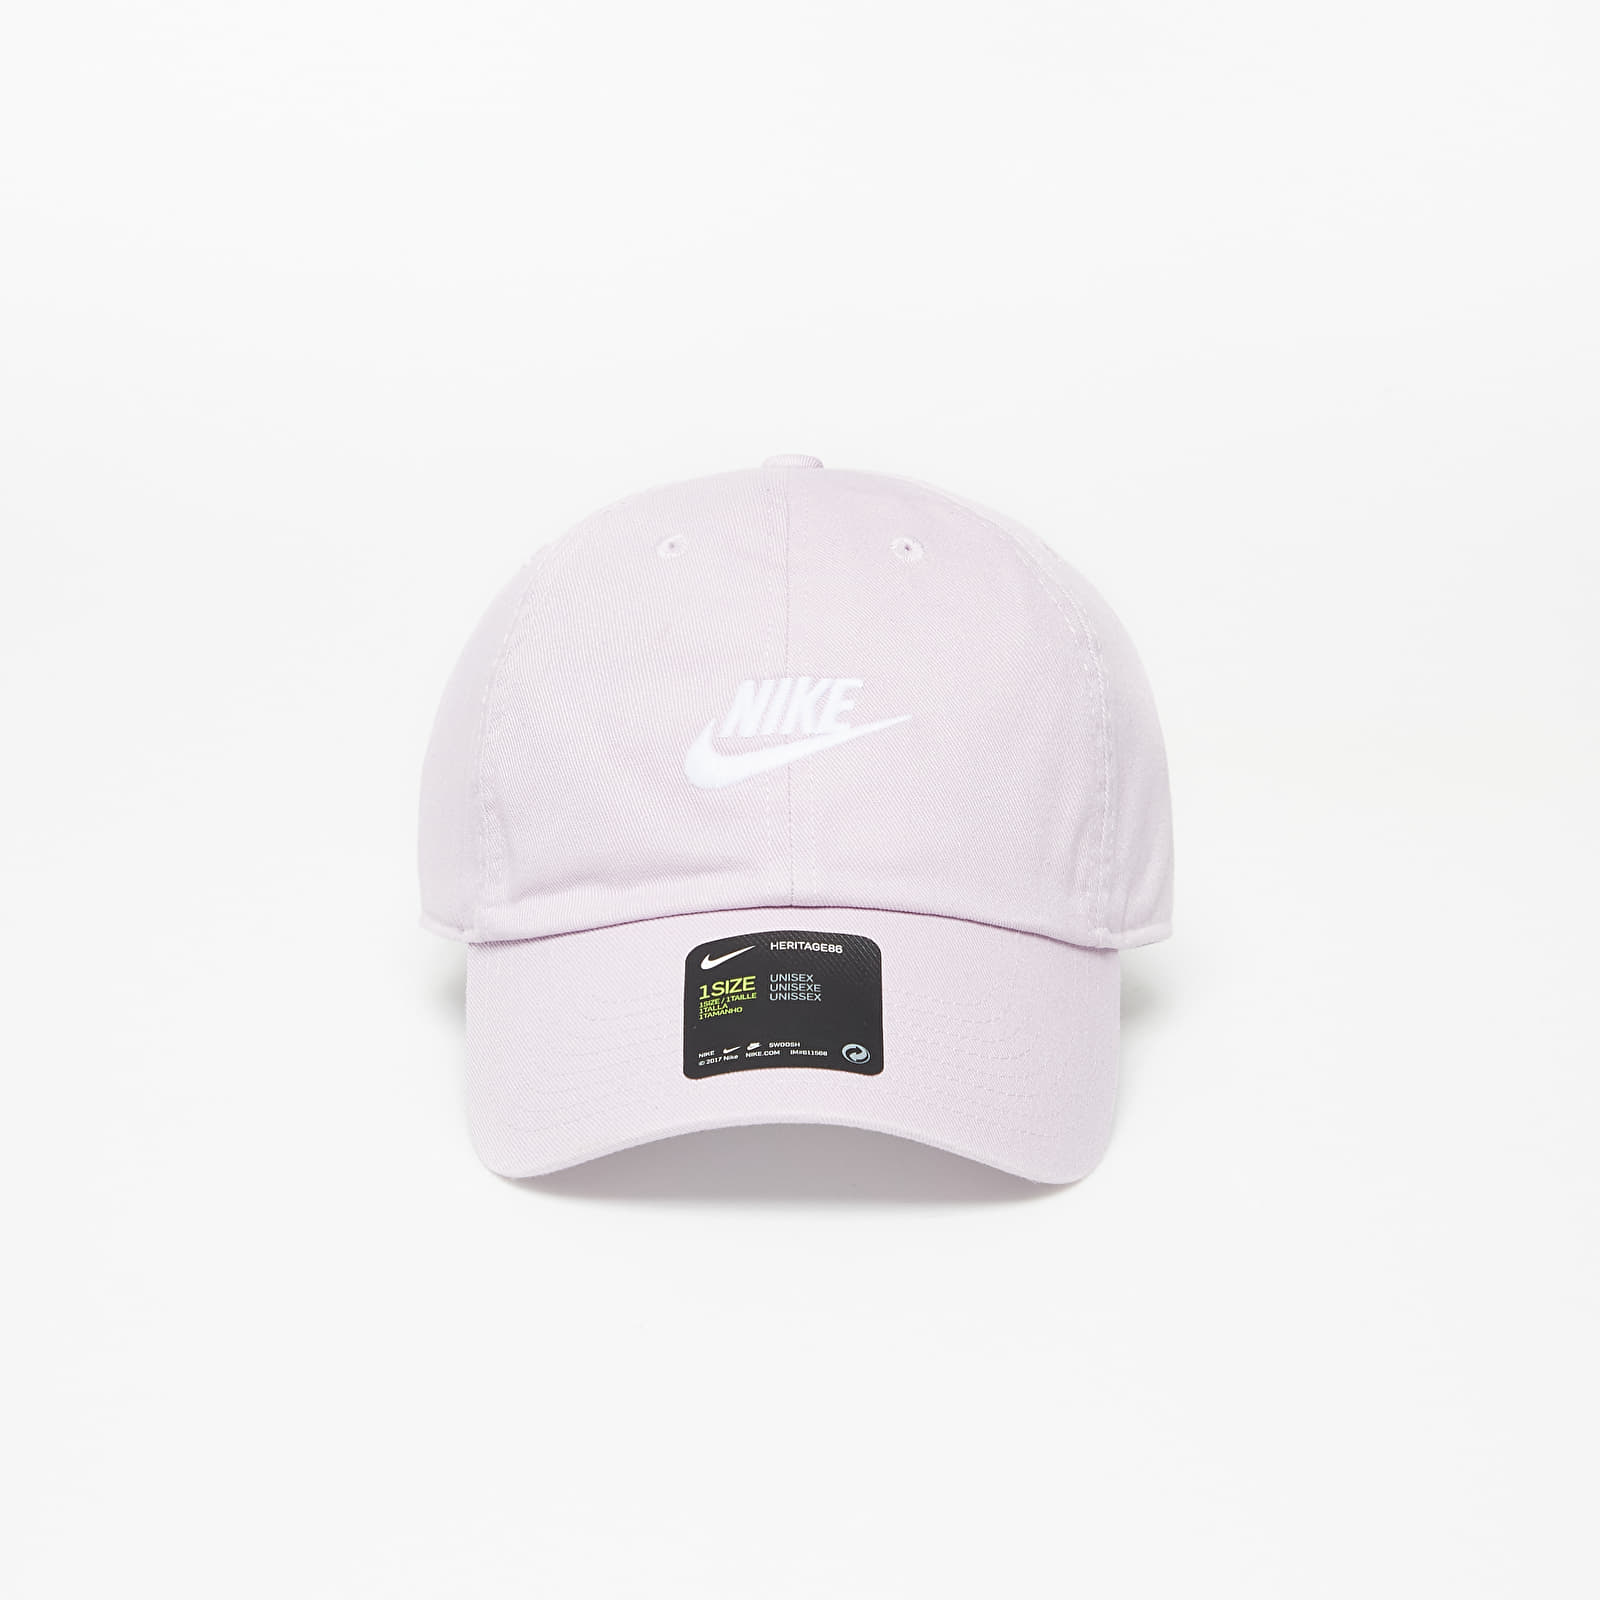 Страпбек Nike Sportswear Cap Iced Lilac/ White 801622